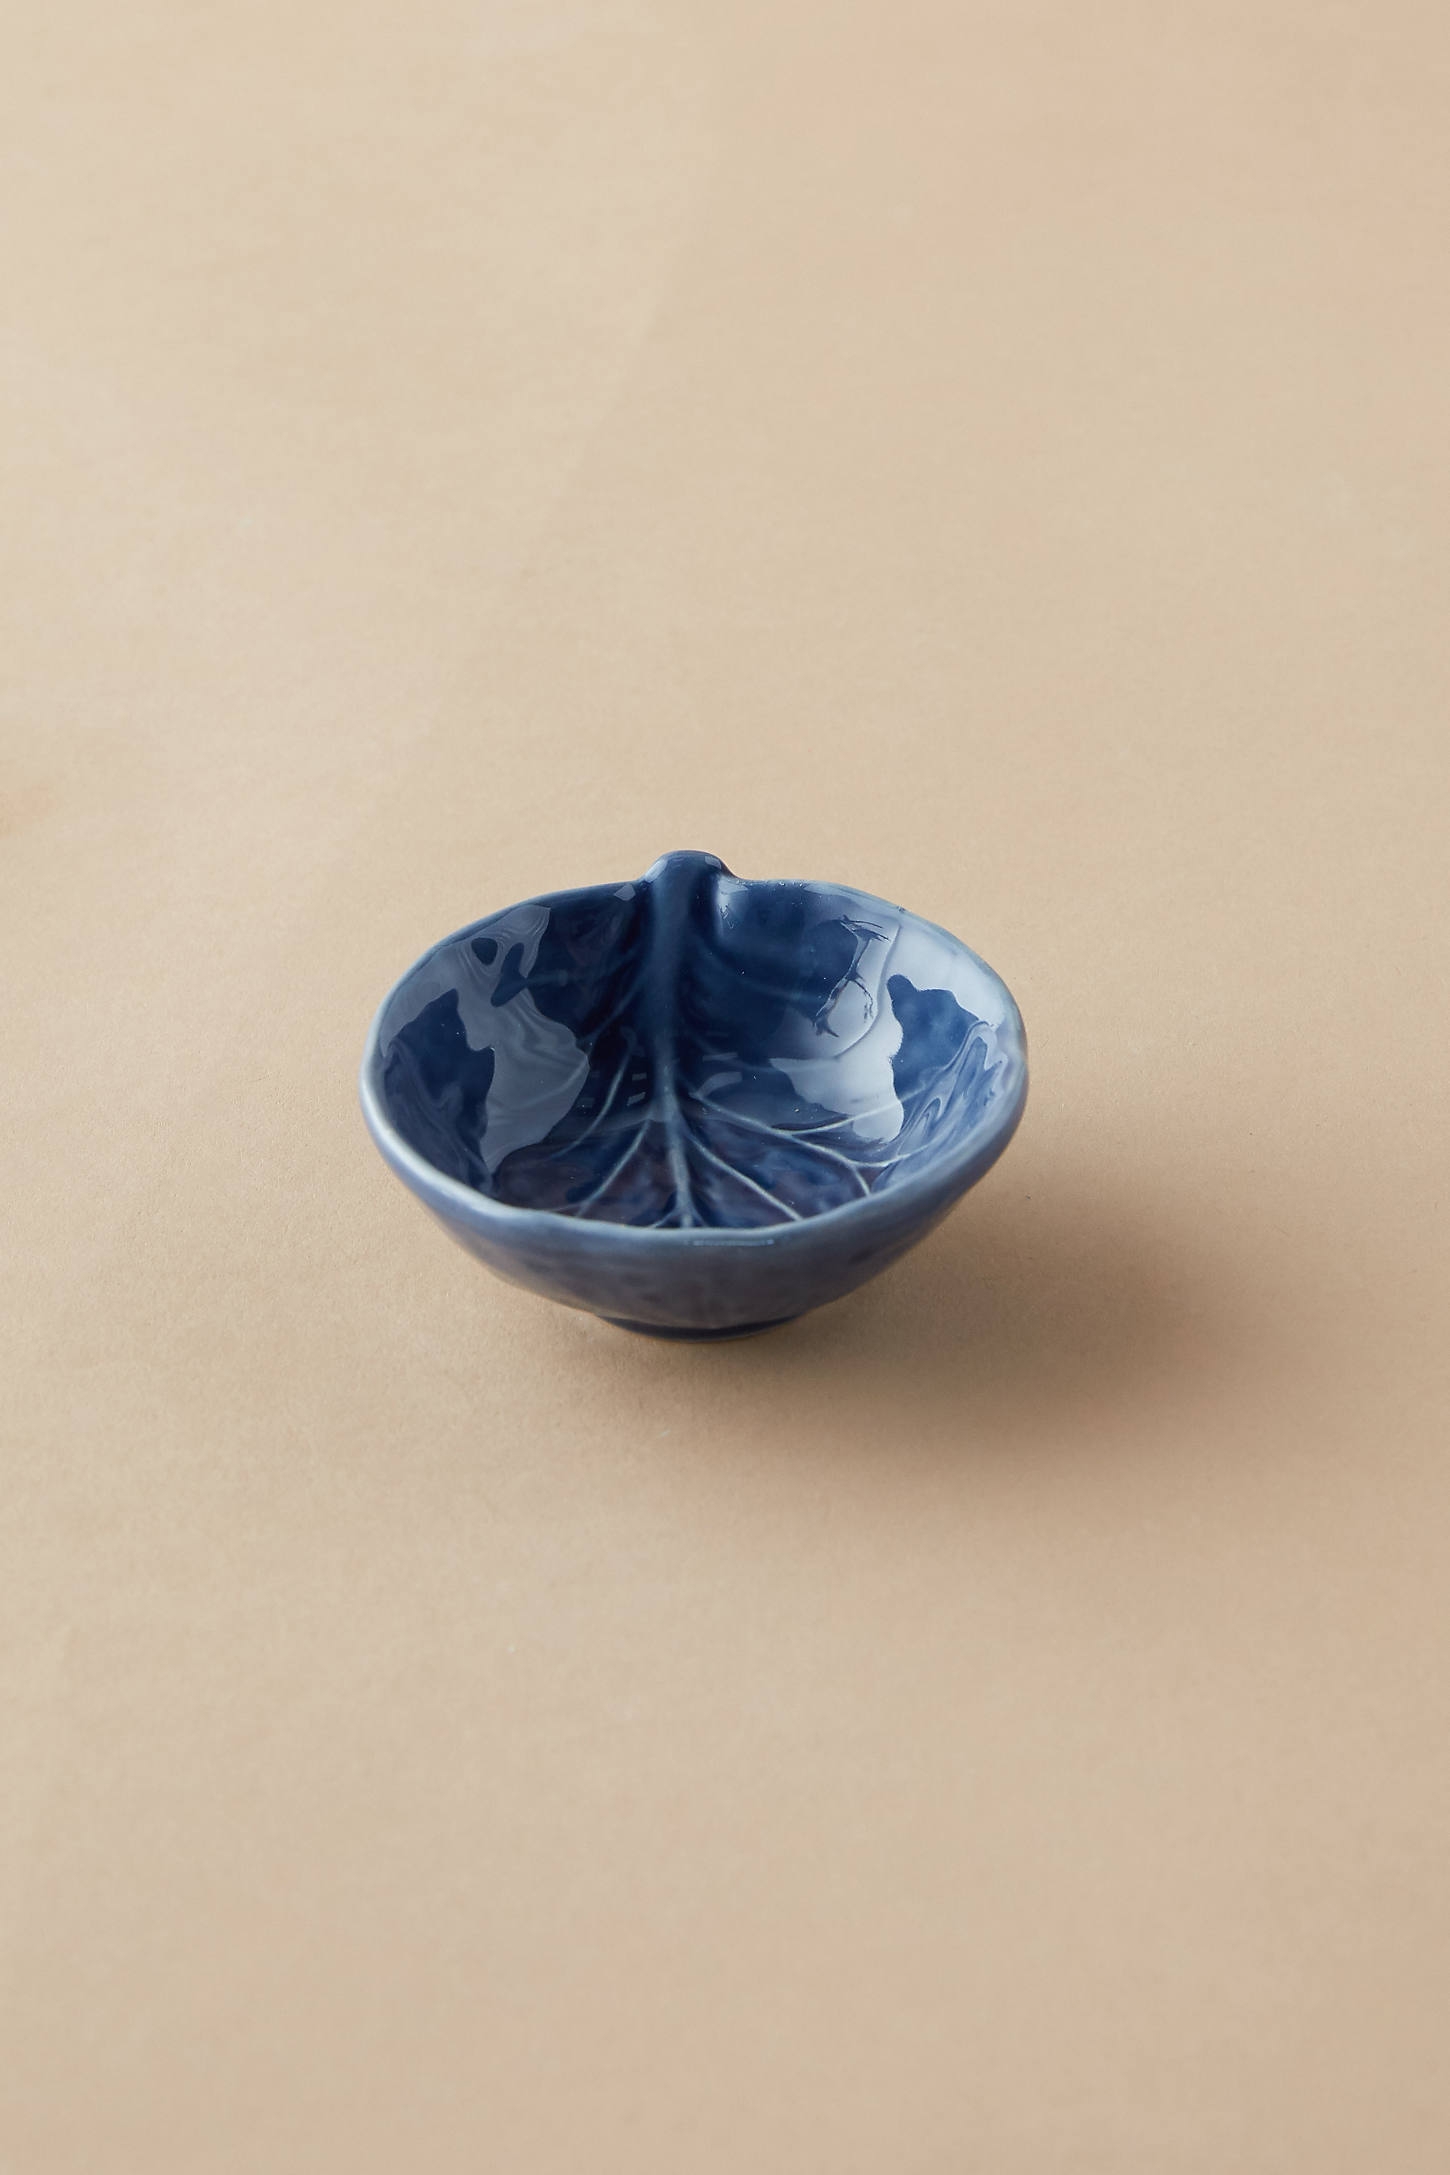 Ceramic Cabbage Salt Cellar By Terrain in Blue - Image 0